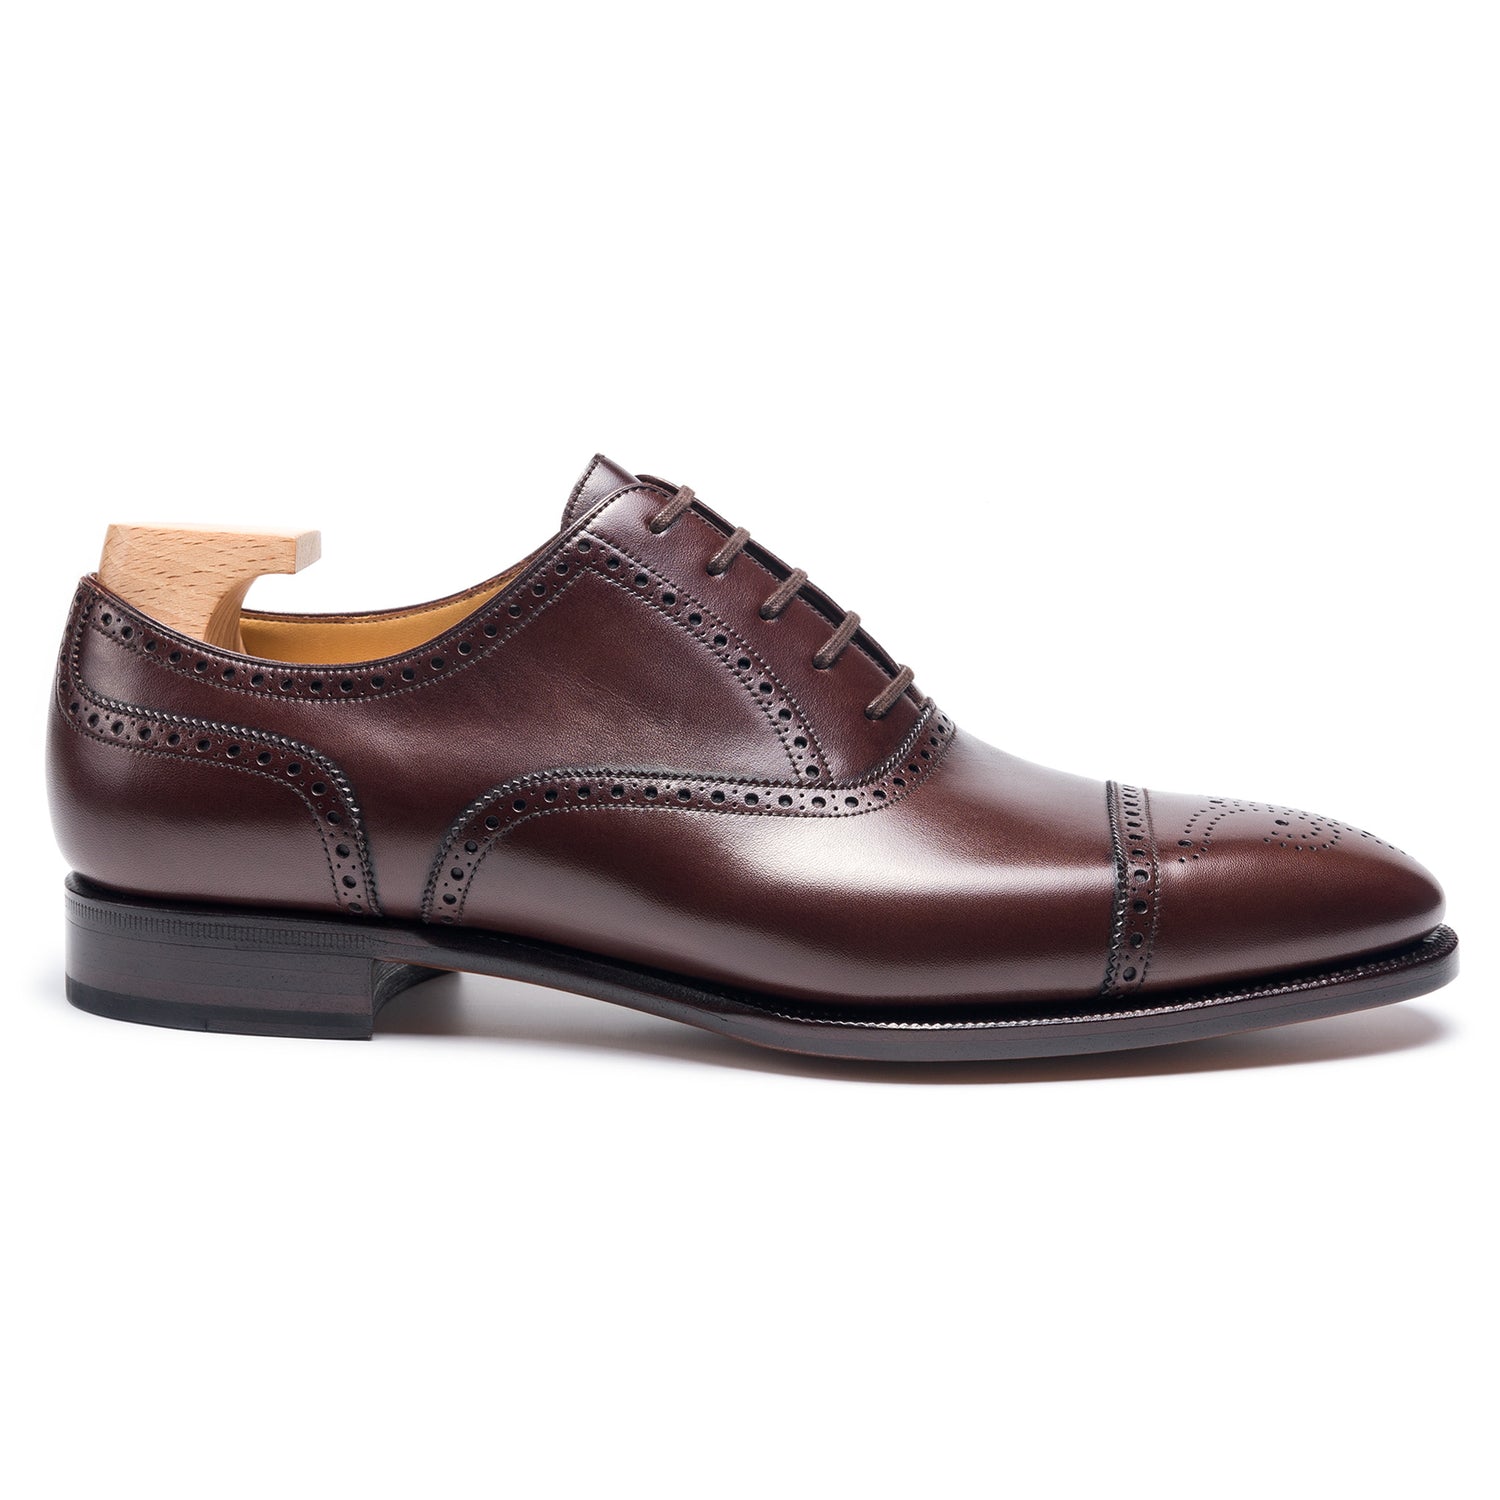 TLB Mallorca leather shoes 210 / GOYA / VEGANO DARK BROWN